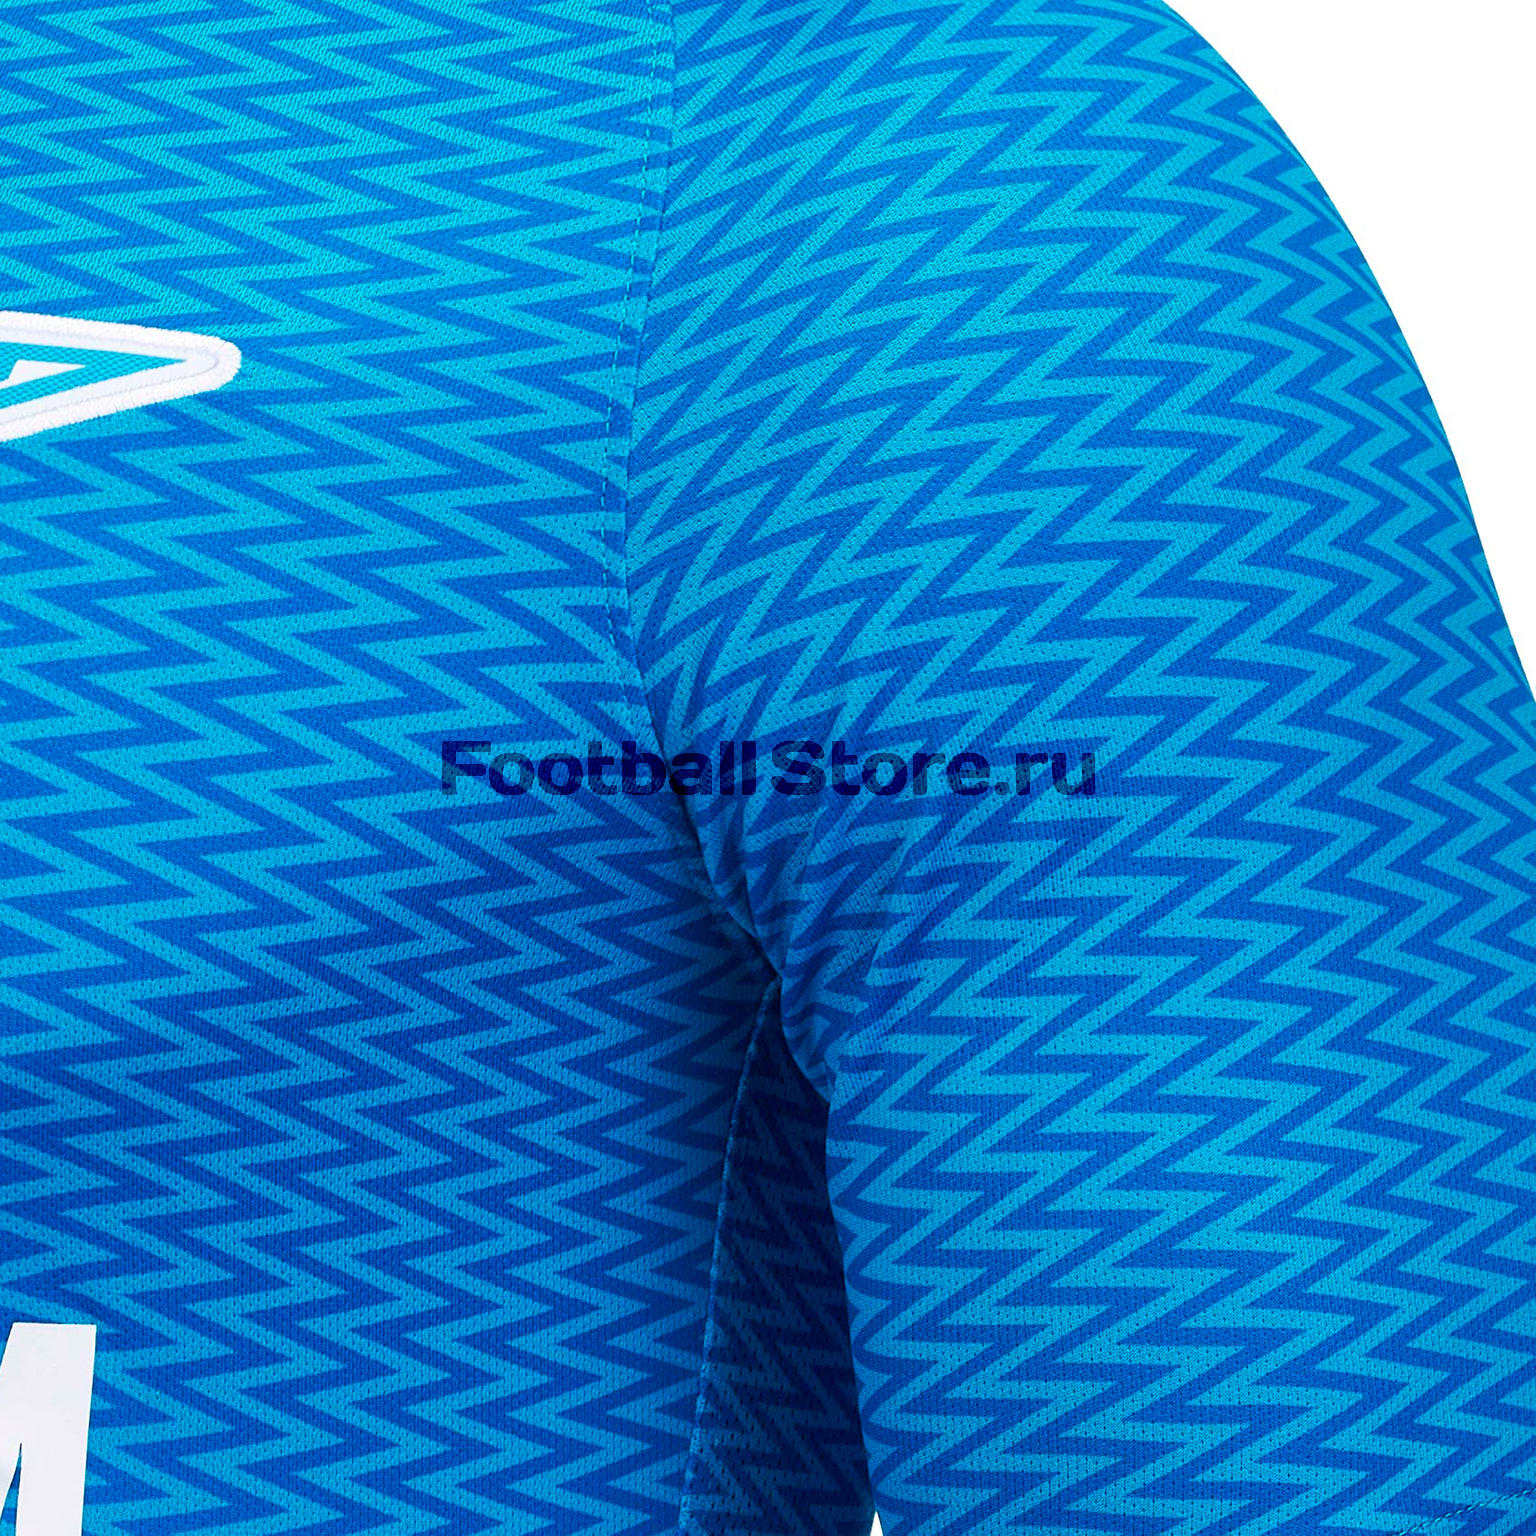 Оригинальная домашняя футболка Nike Zenit сезон 2018/19